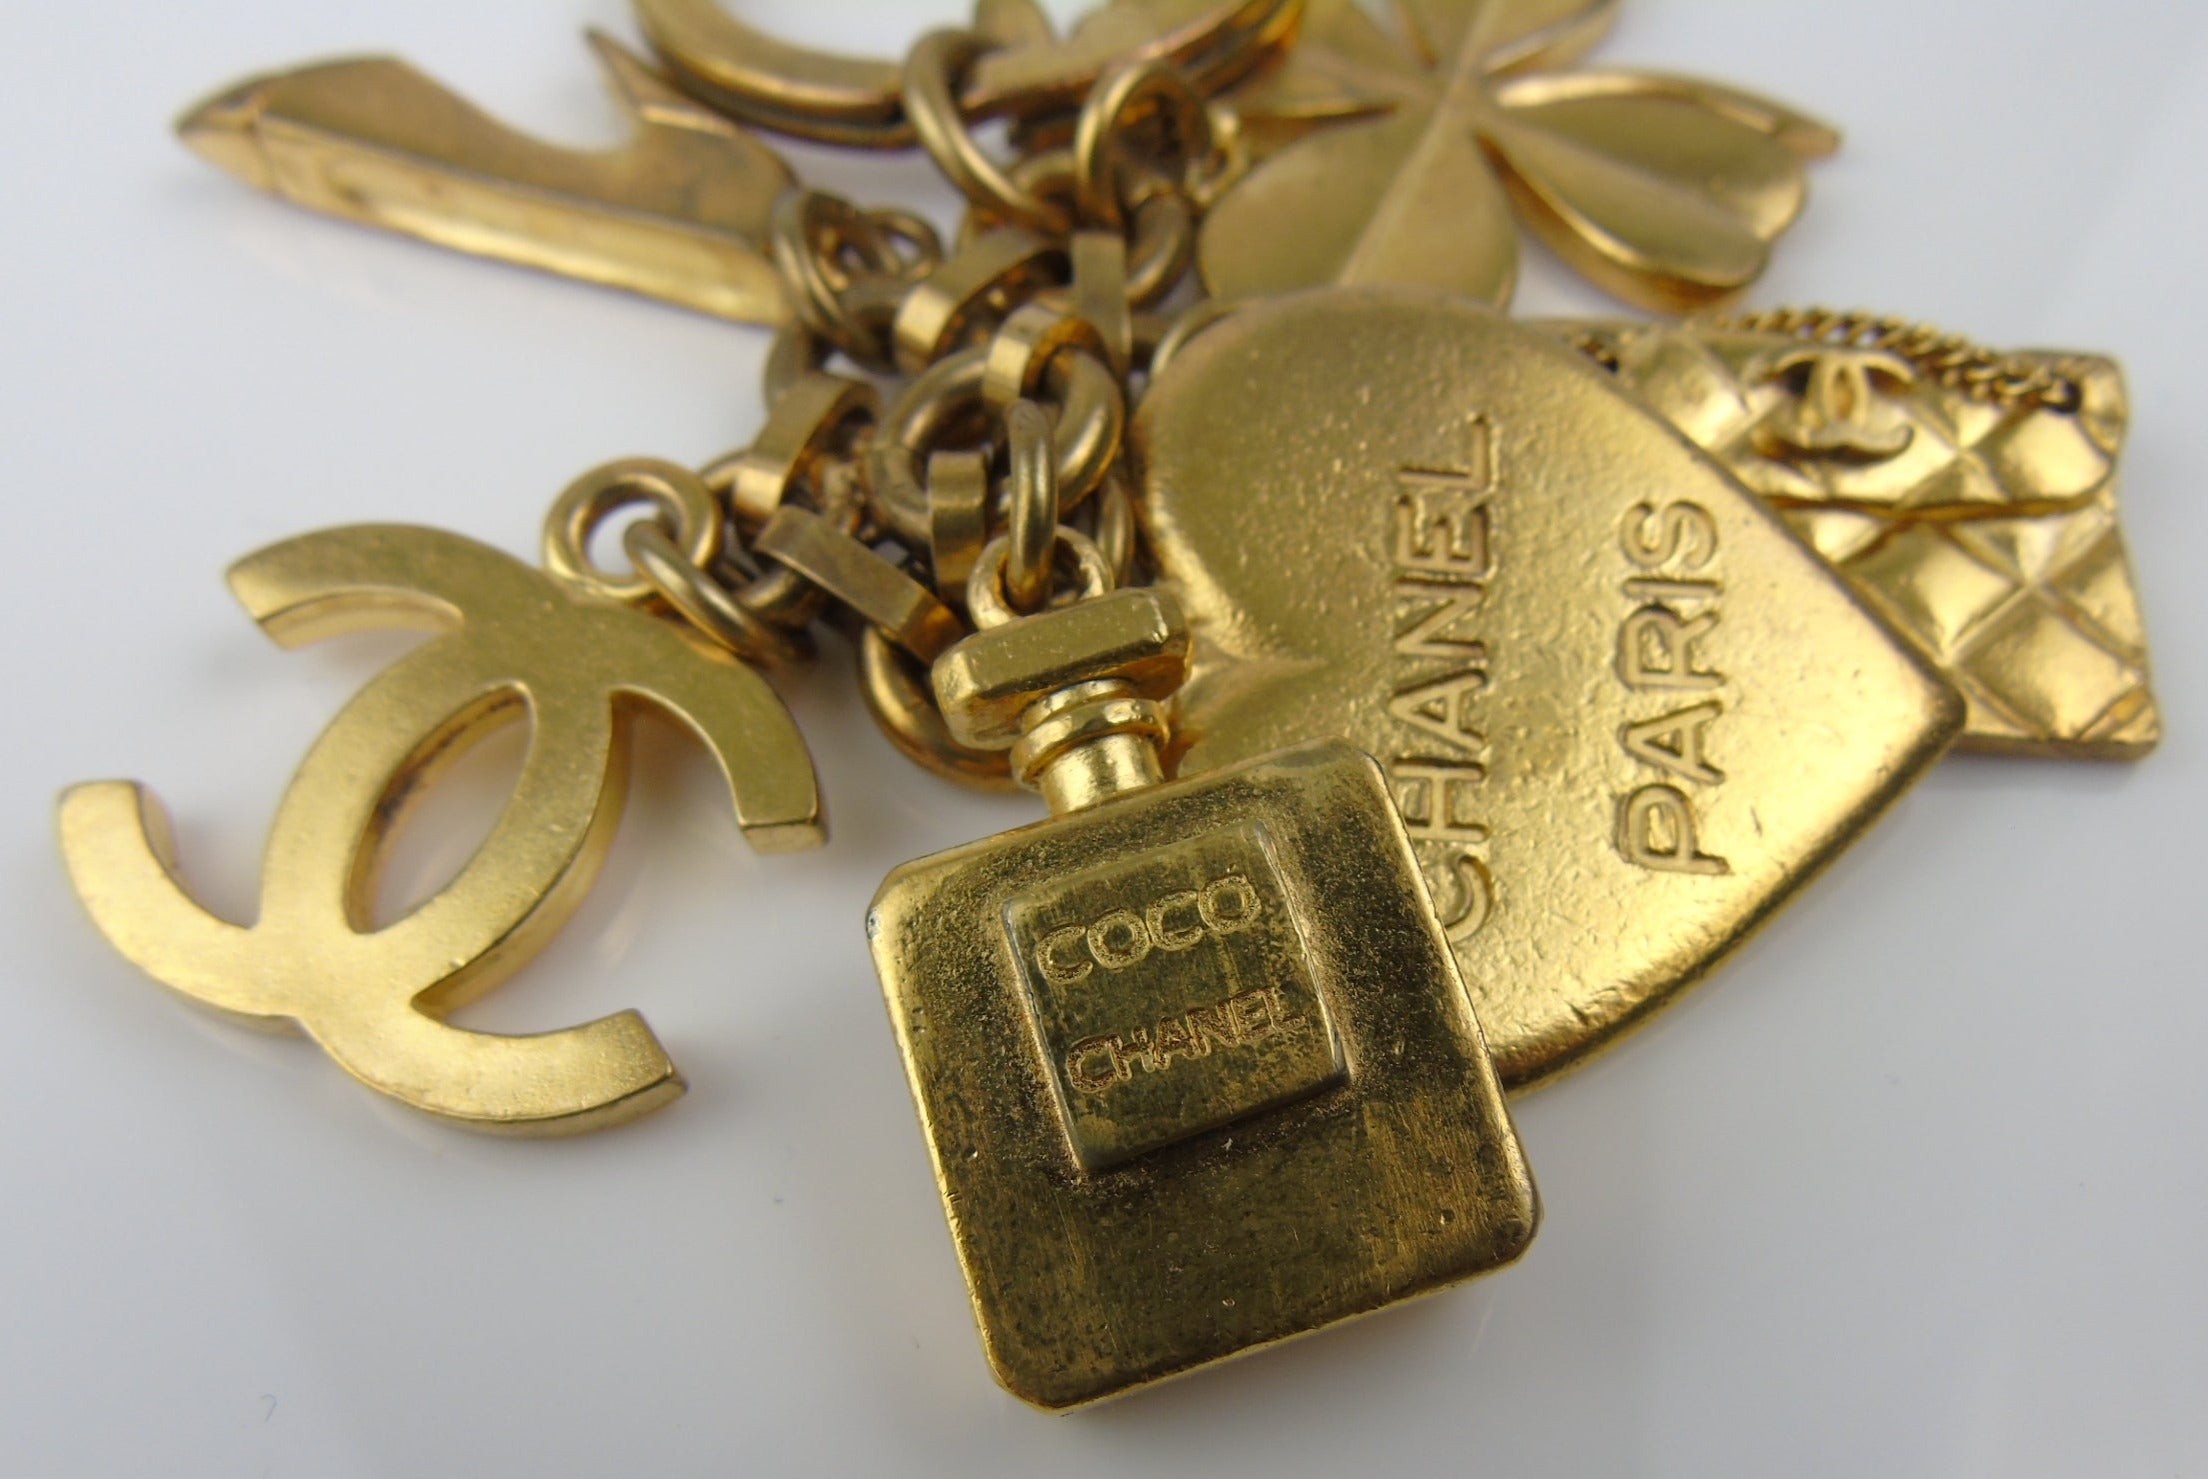 CHANEL Gold plated bag charms keyring - vintage – Loubi, Lou & Coco